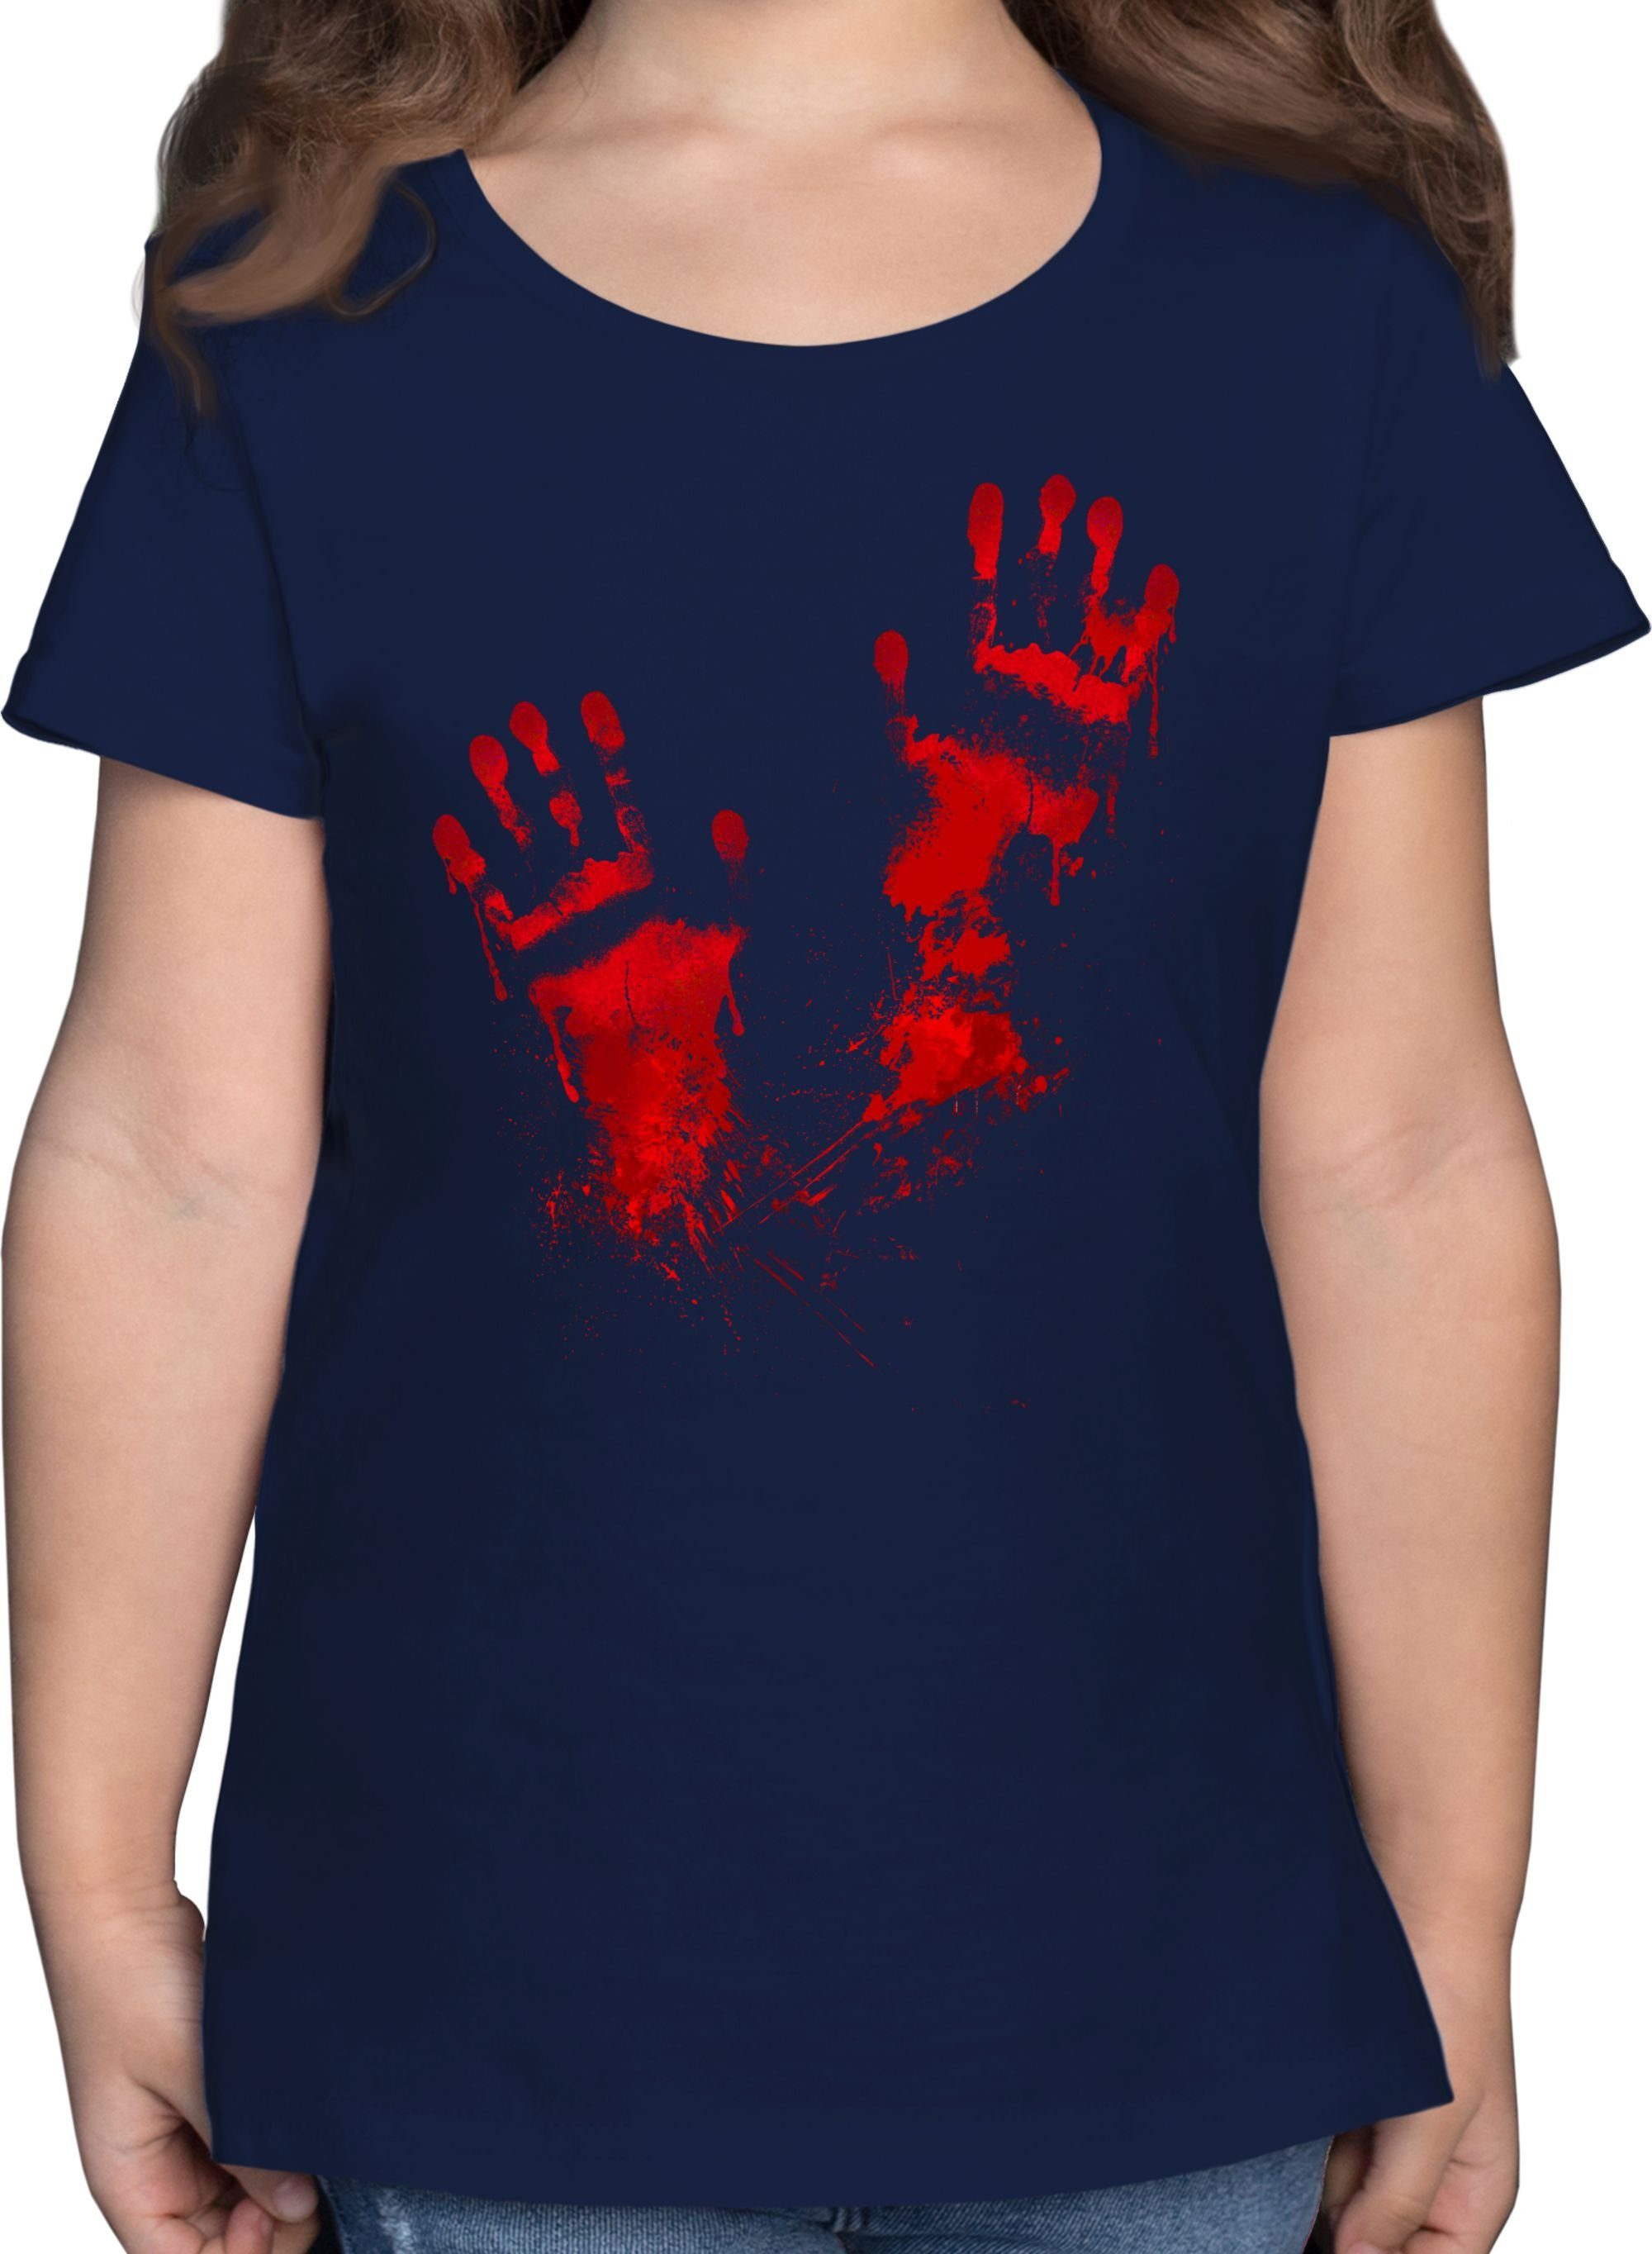 Blut Dunkelblau Shirtracer für 3 Handabdruck T-Shirt Blutige Halloween Kostüme Kinder Gruselig Handabdrücke